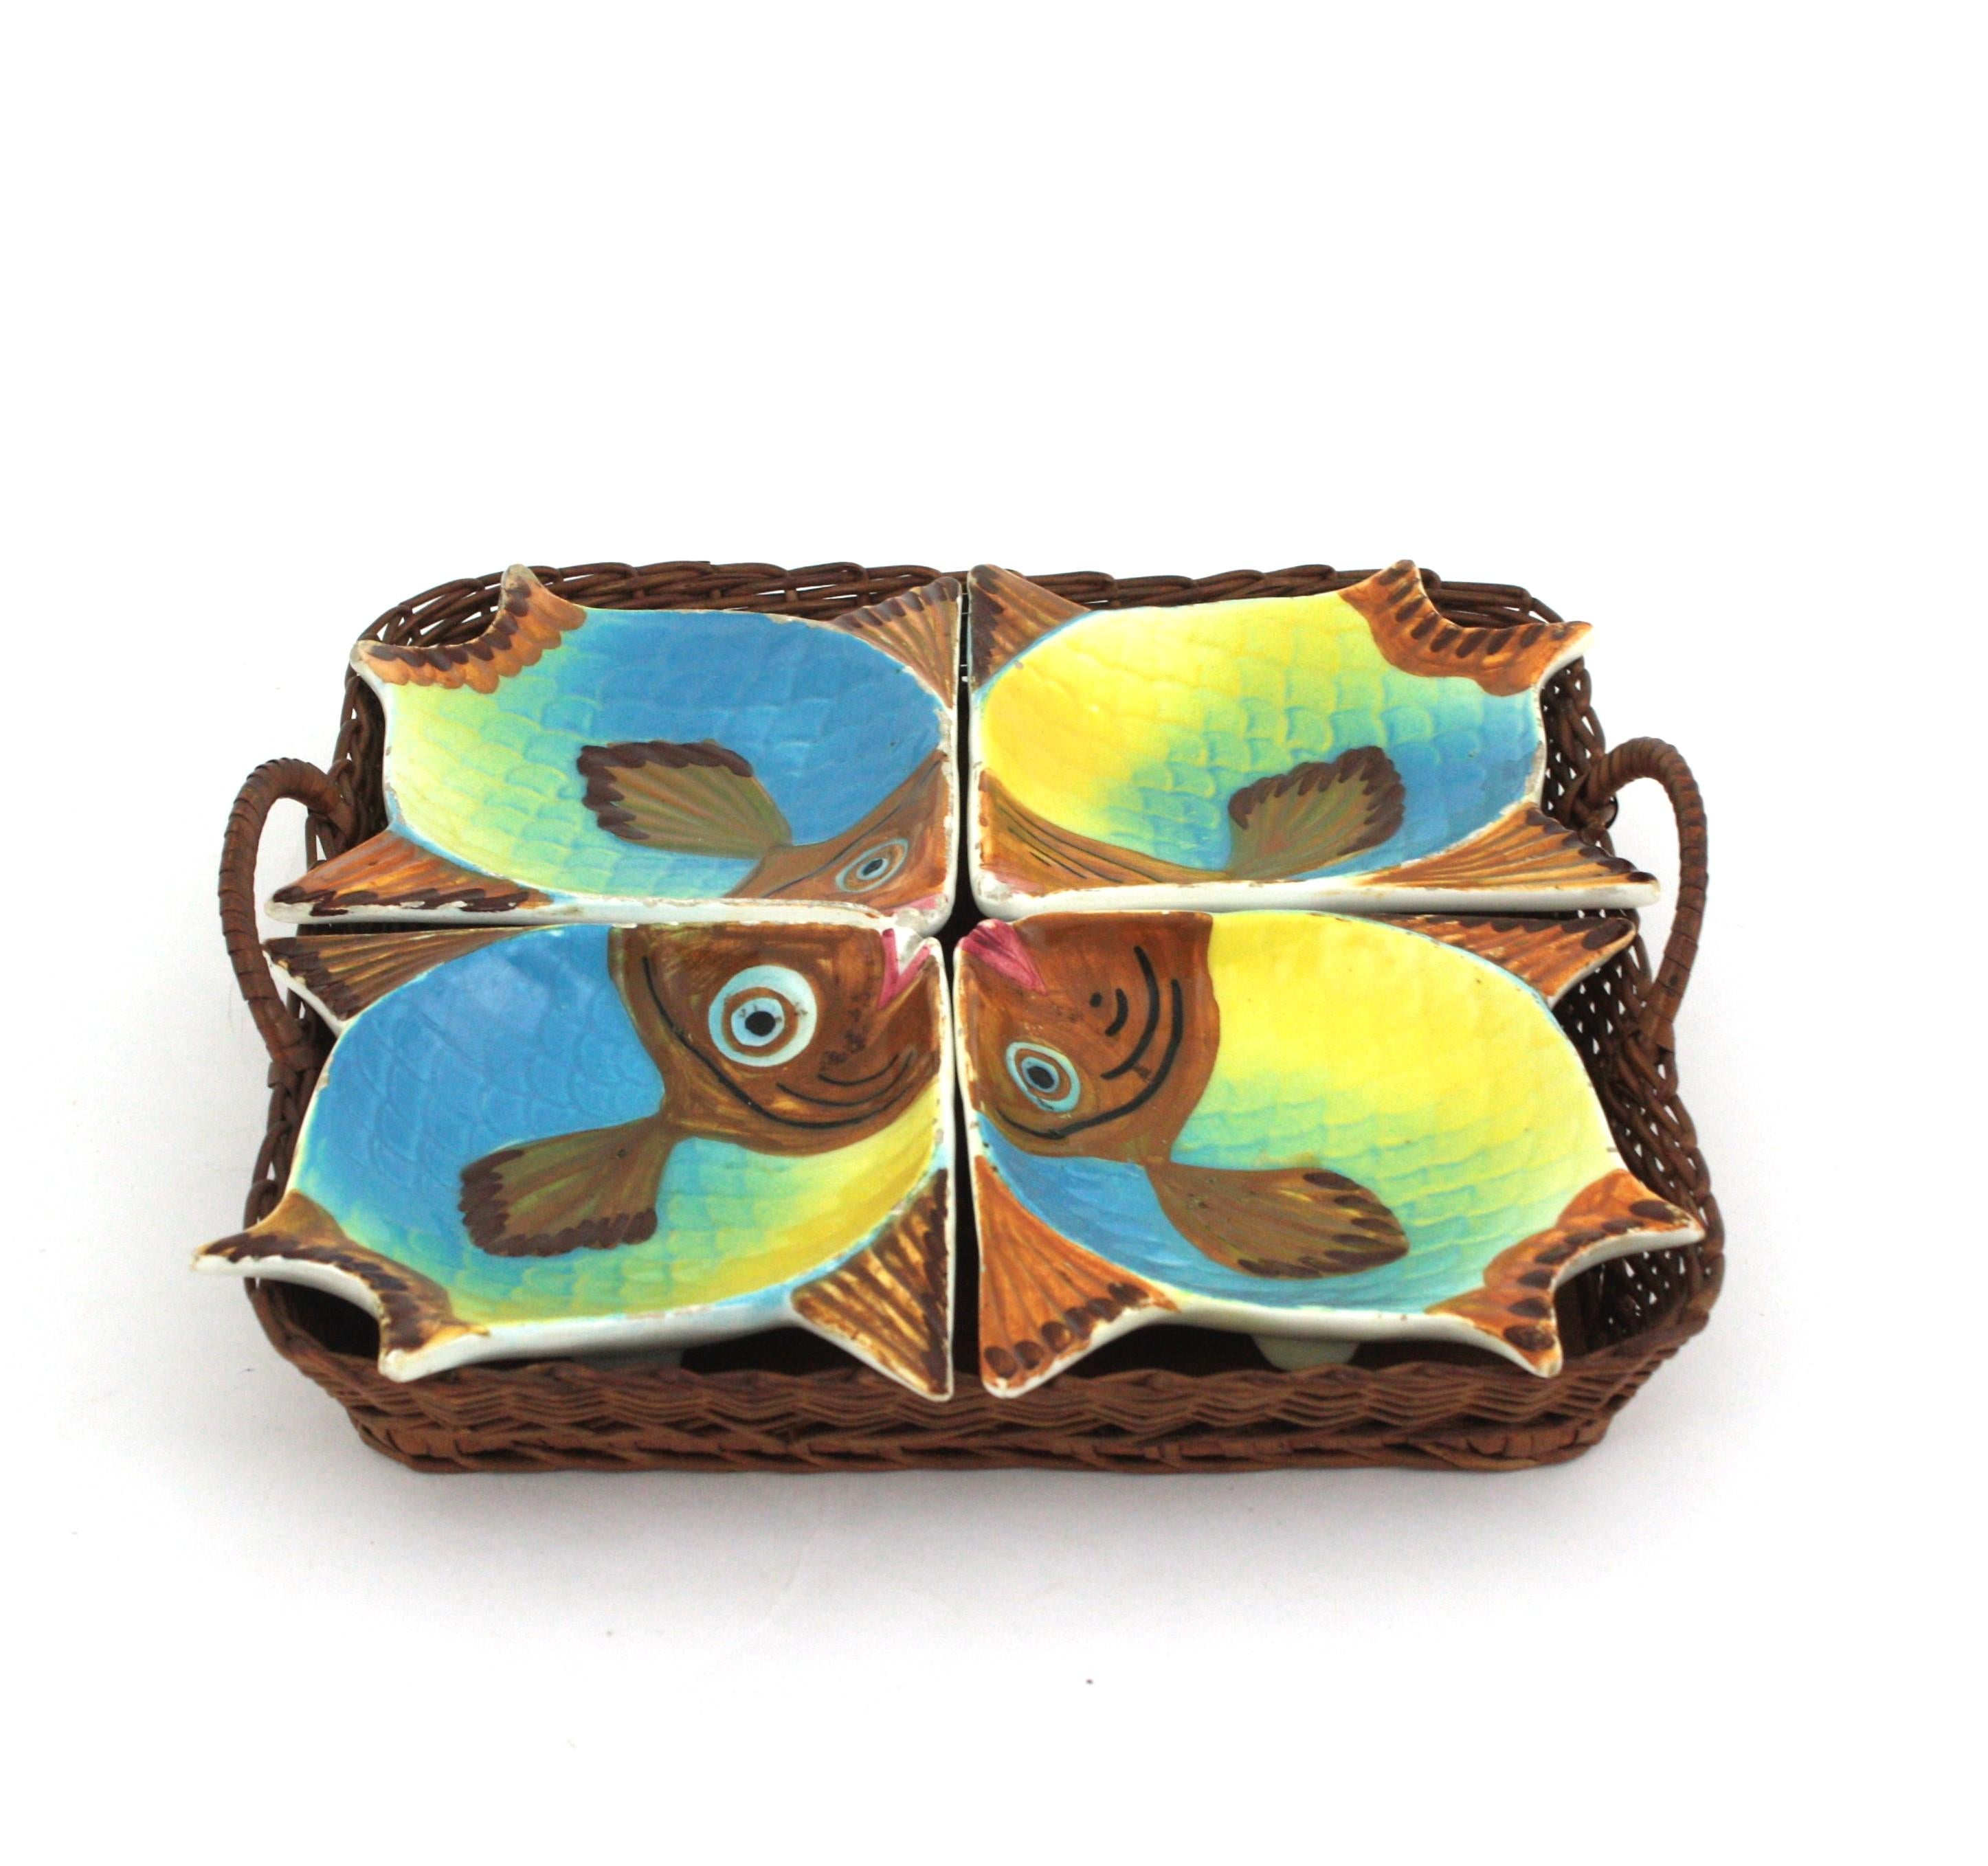 Glazed Spanish Ceramic Fish Bowls and Rattan Tray Snacks Set For Sale